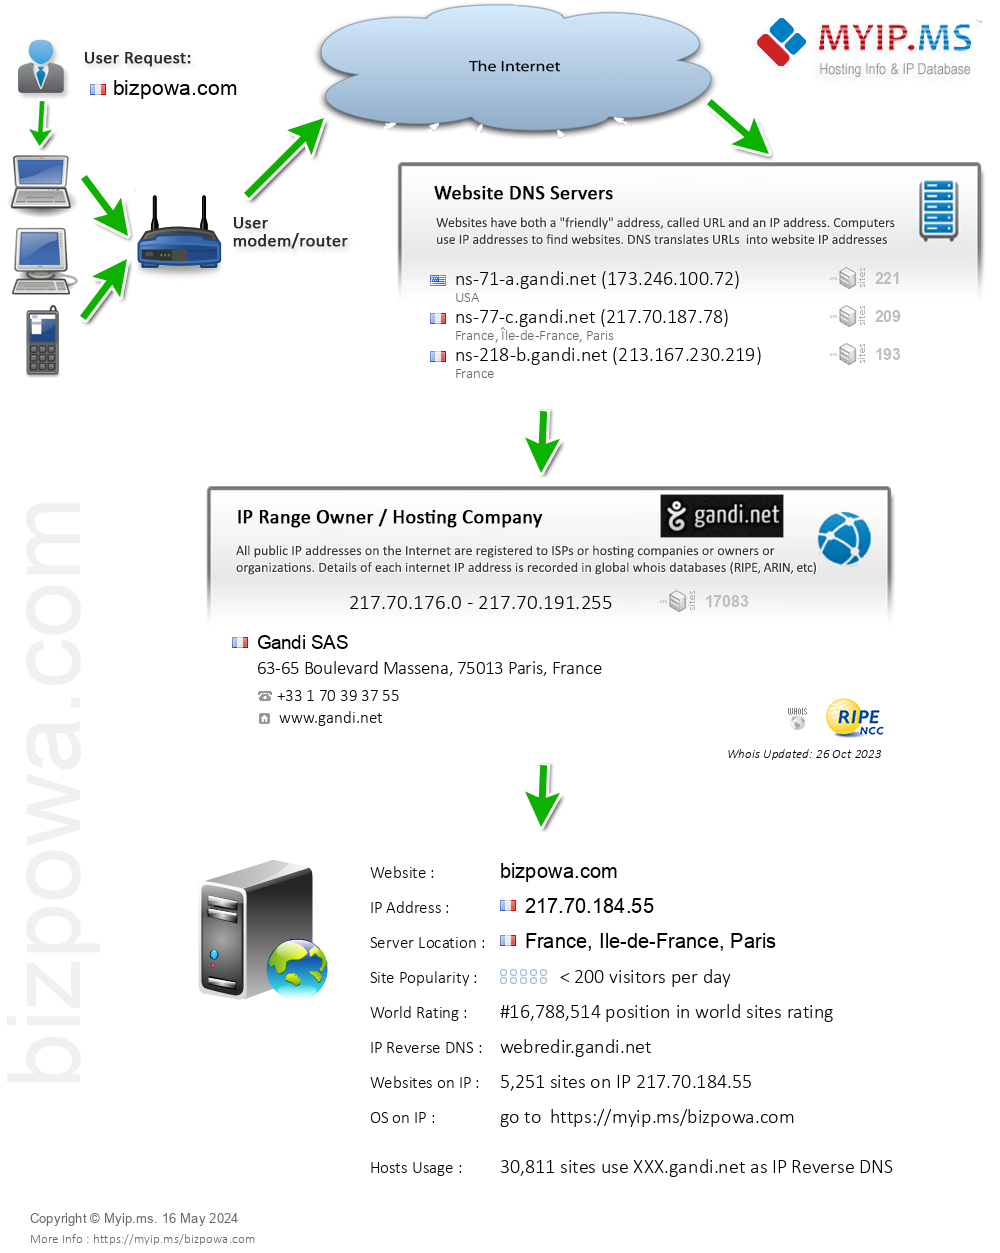 Bizpowa.com - Website Hosting Visual IP Diagram